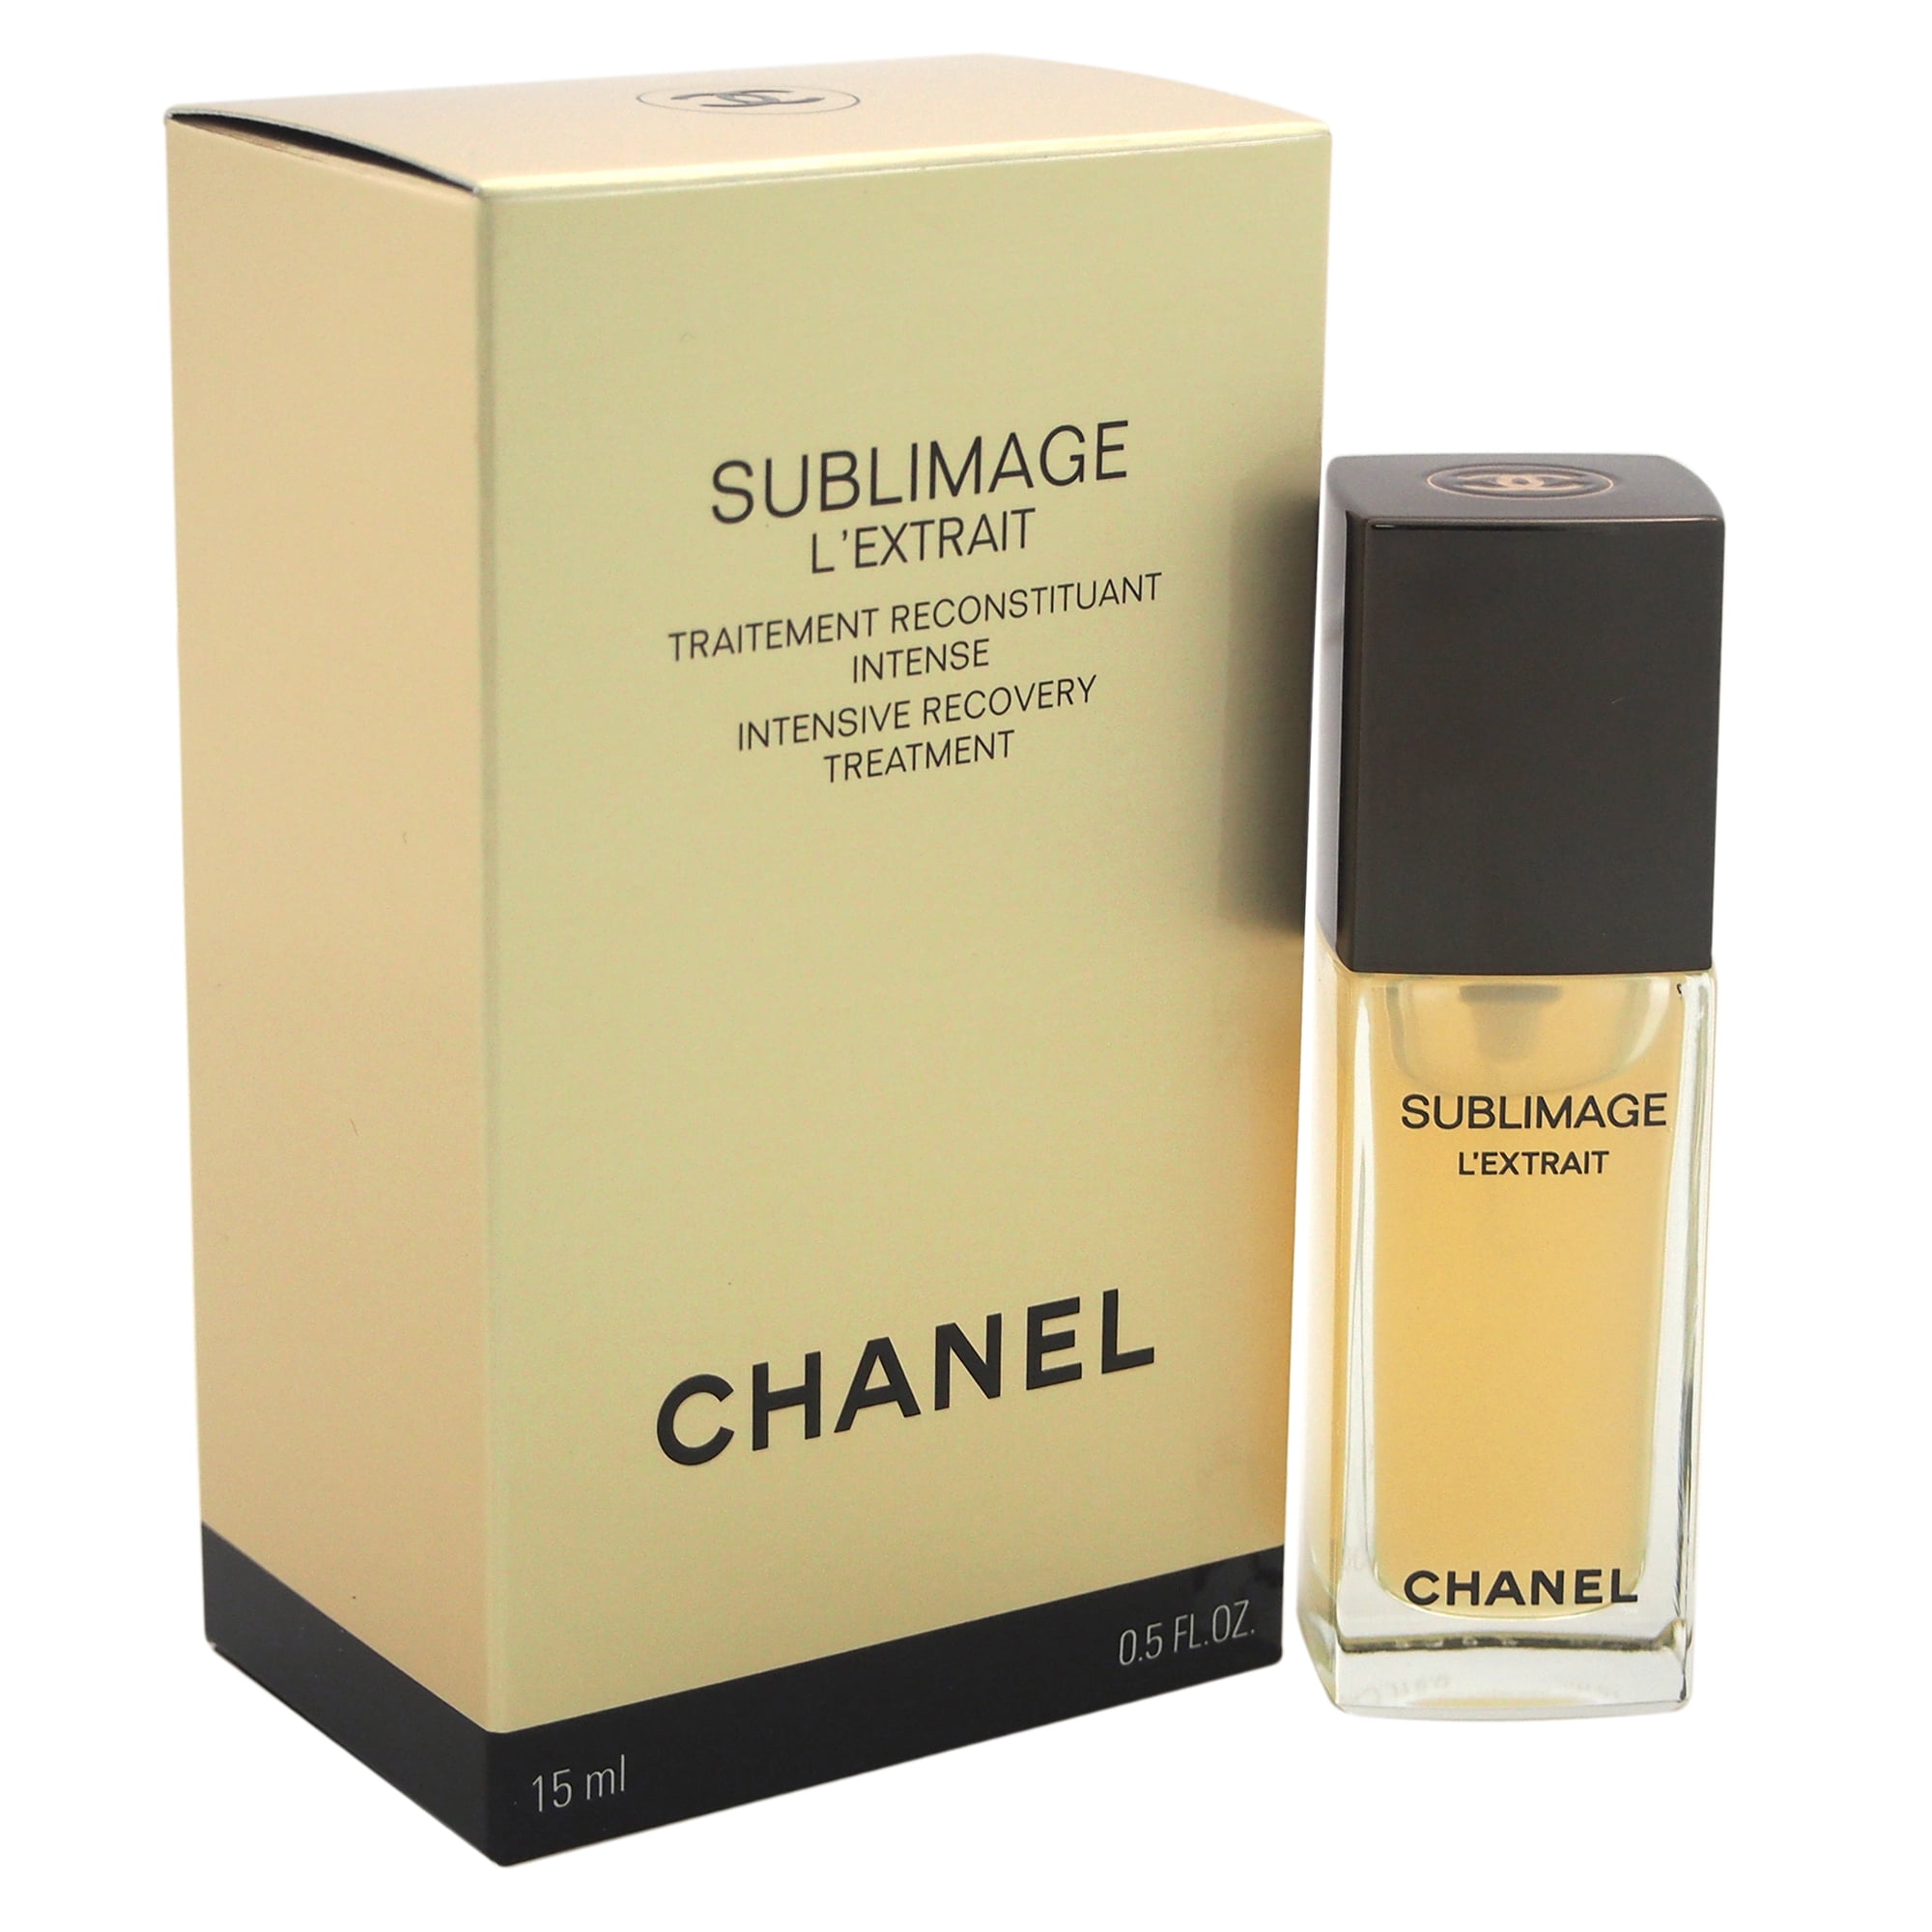 Chanel SUBLIMAGE L'EXTRAIT, € 380,- (1170 Wien) - willhaben